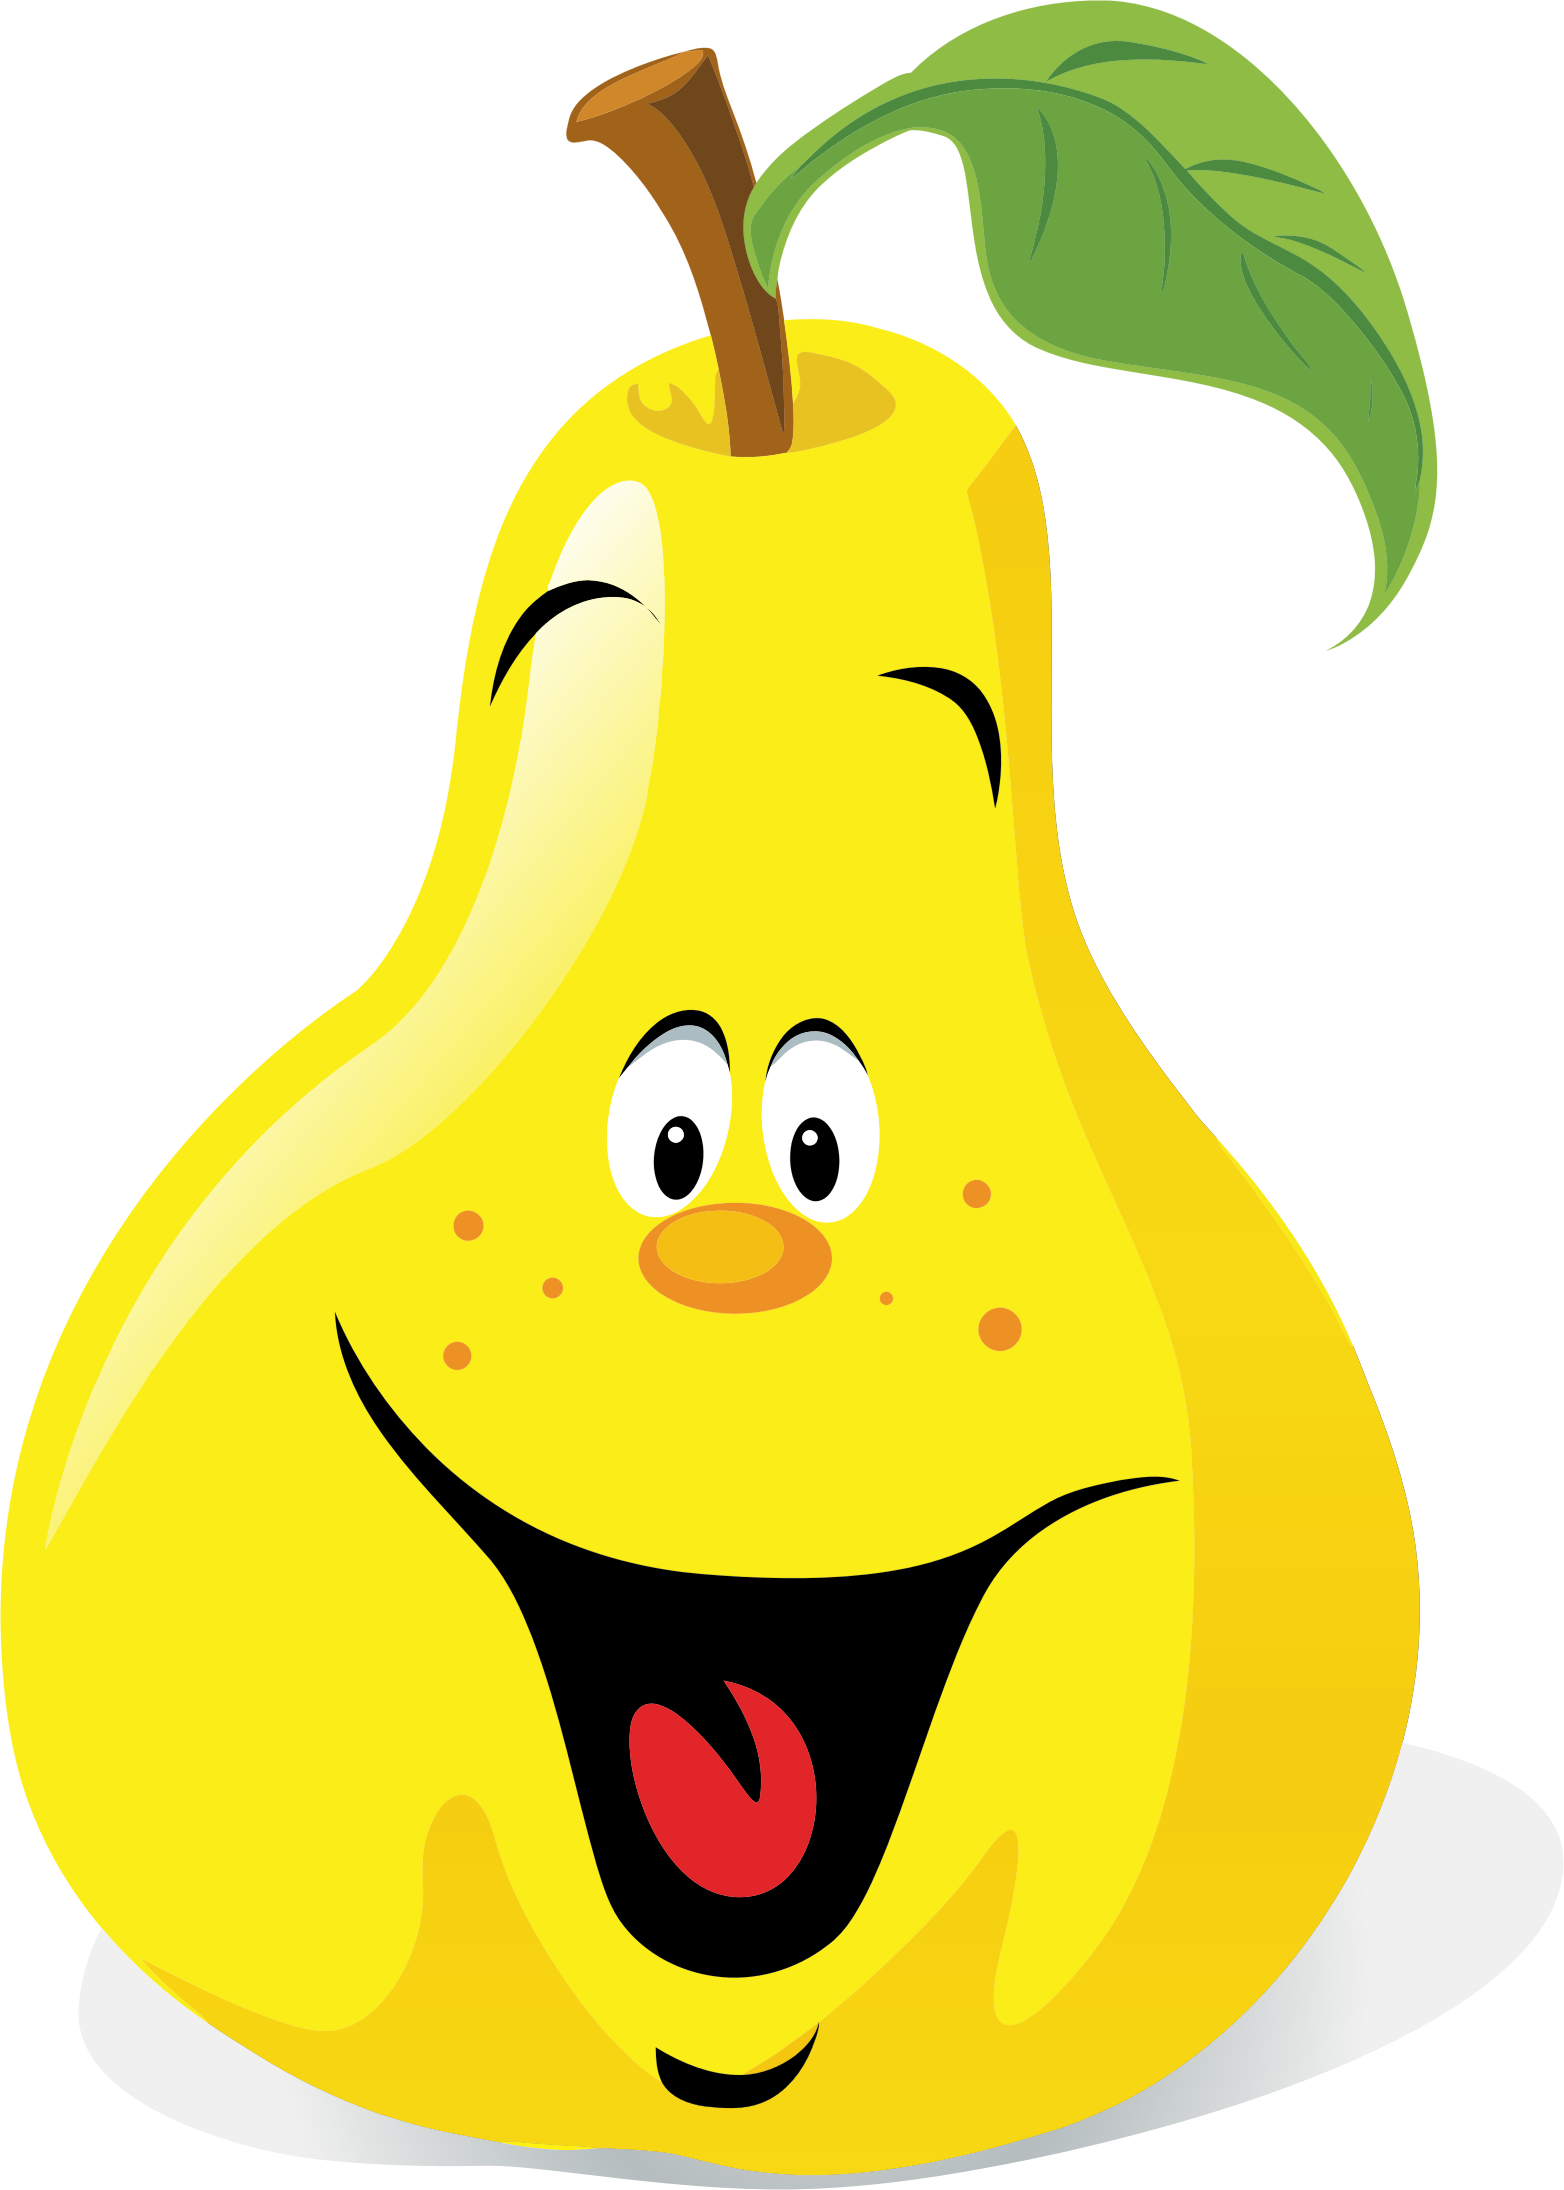 A Cartoon Of A Pear